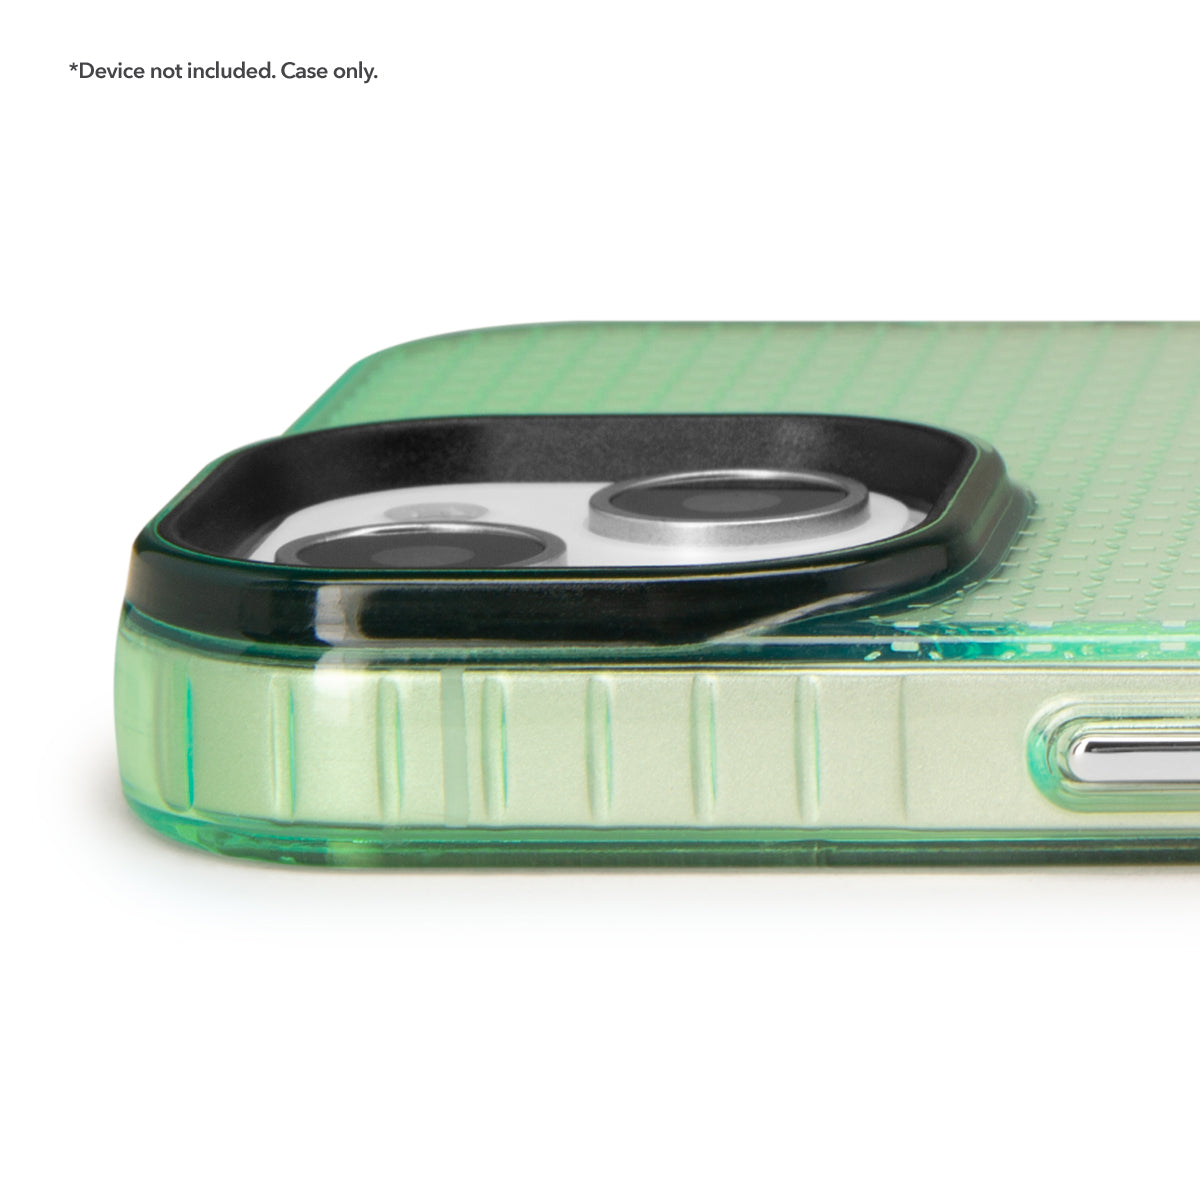 ShOx Ombre - iPhone 15 Emerald/ Ocean Blue w/ MagSafe Cases